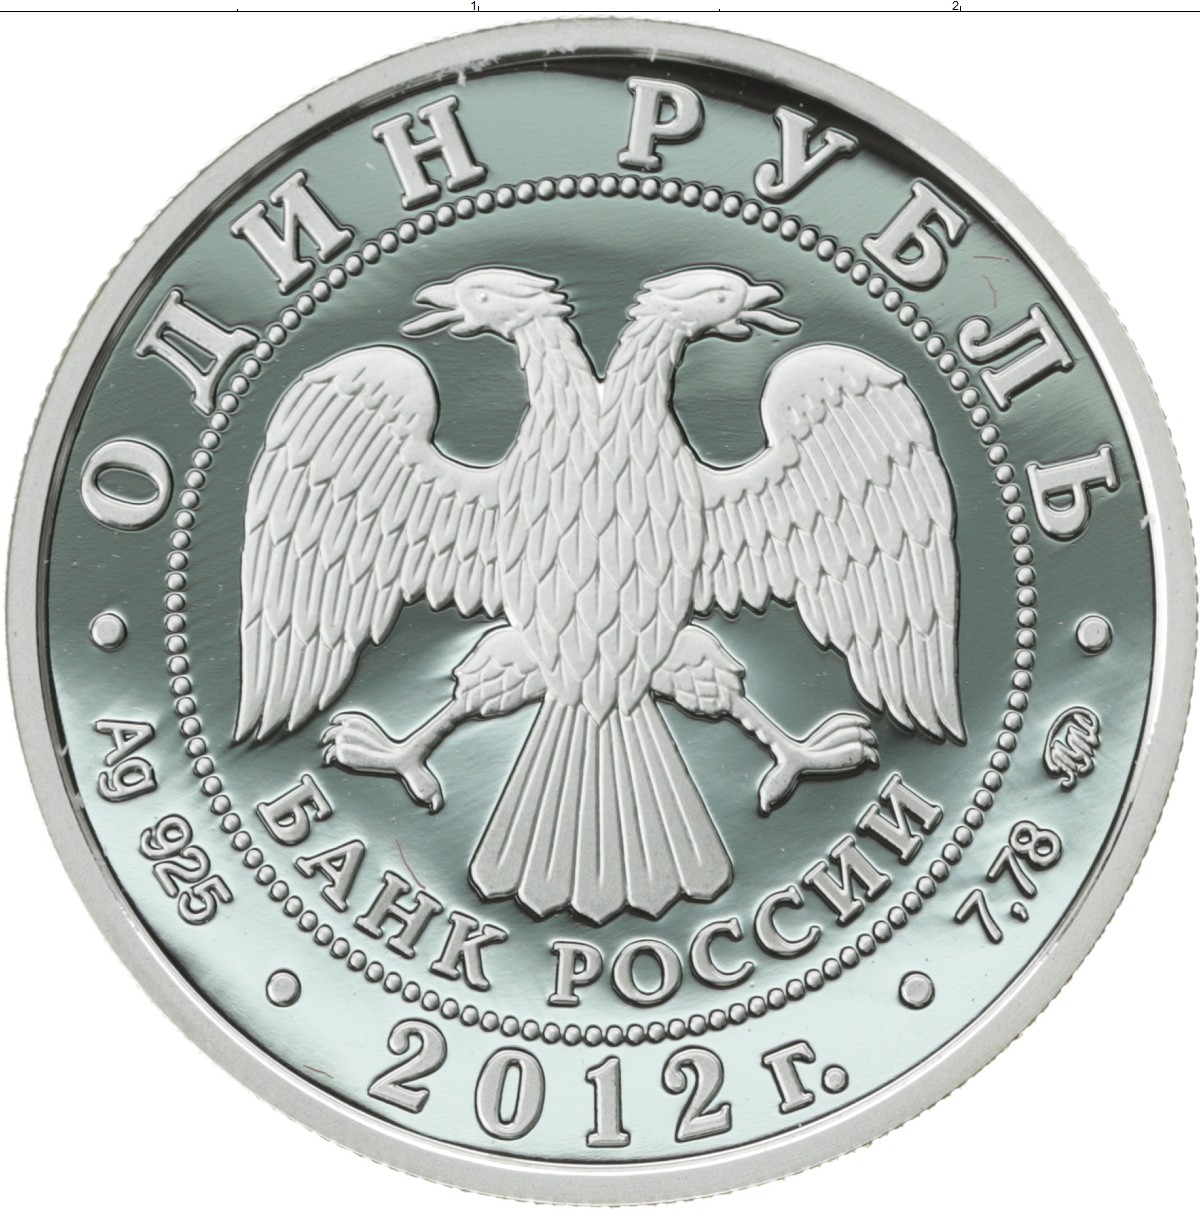 150 рублей россии. Монета 1 рубль серебро. 1 Рубль Российская Федерация серебро. Монета 1 рубль серебро МИД. Серебряная монета монета рубль.